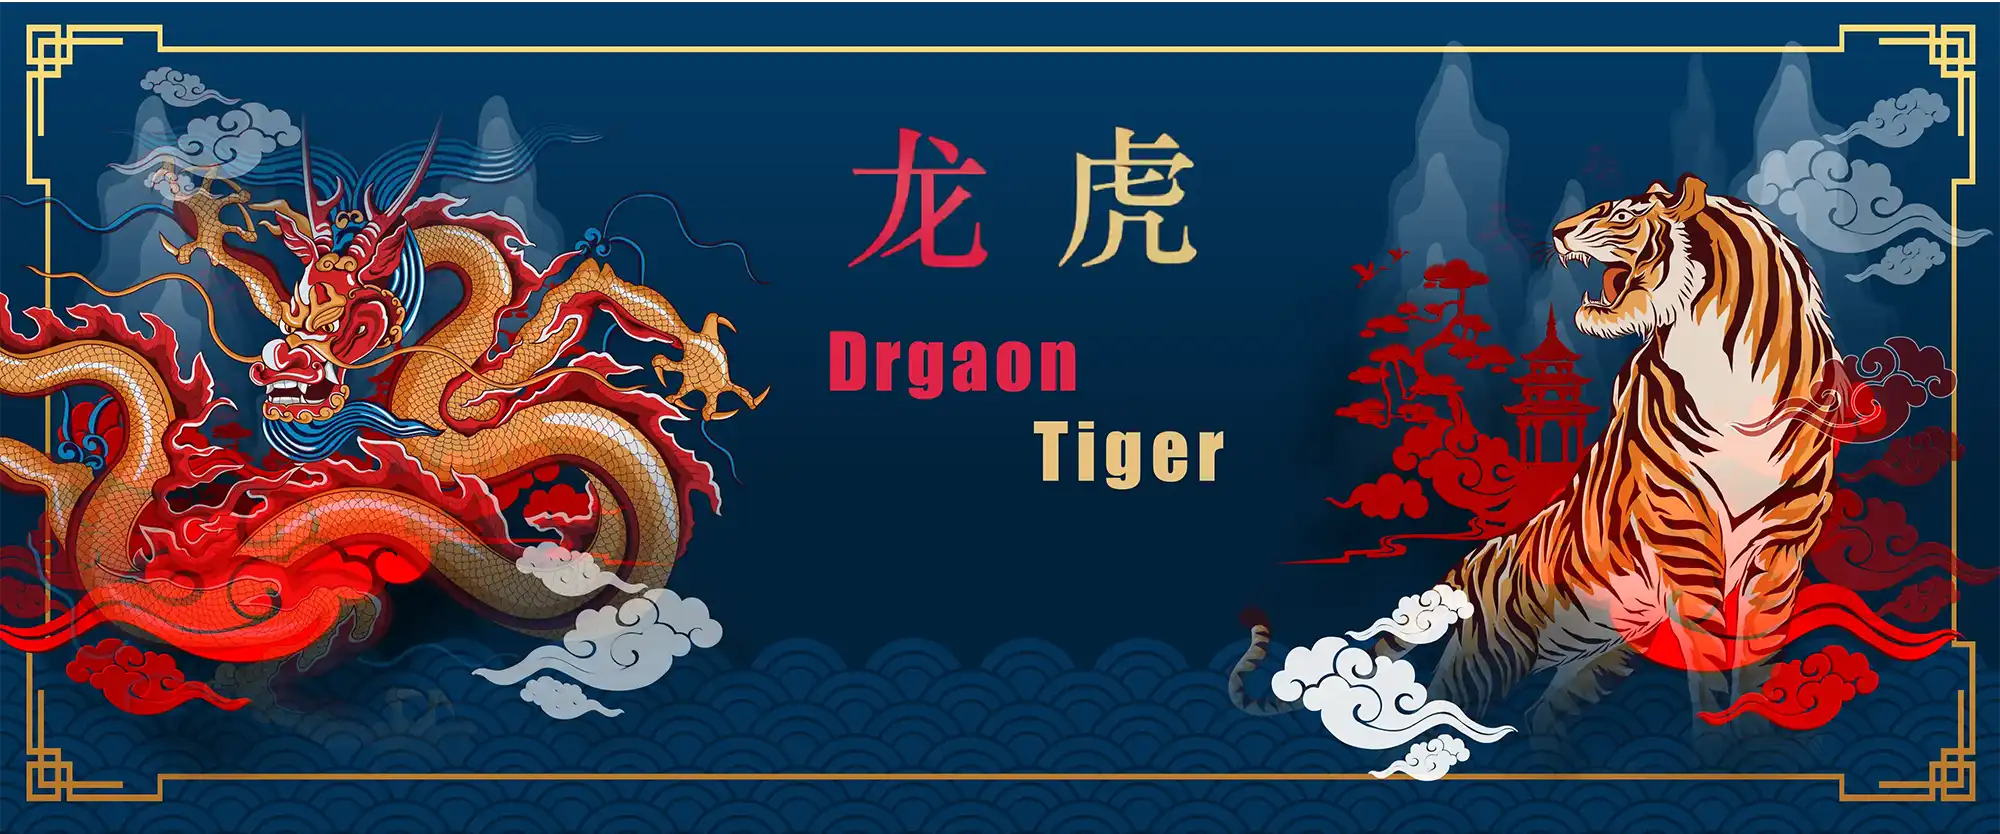 dragon-tiger-banner